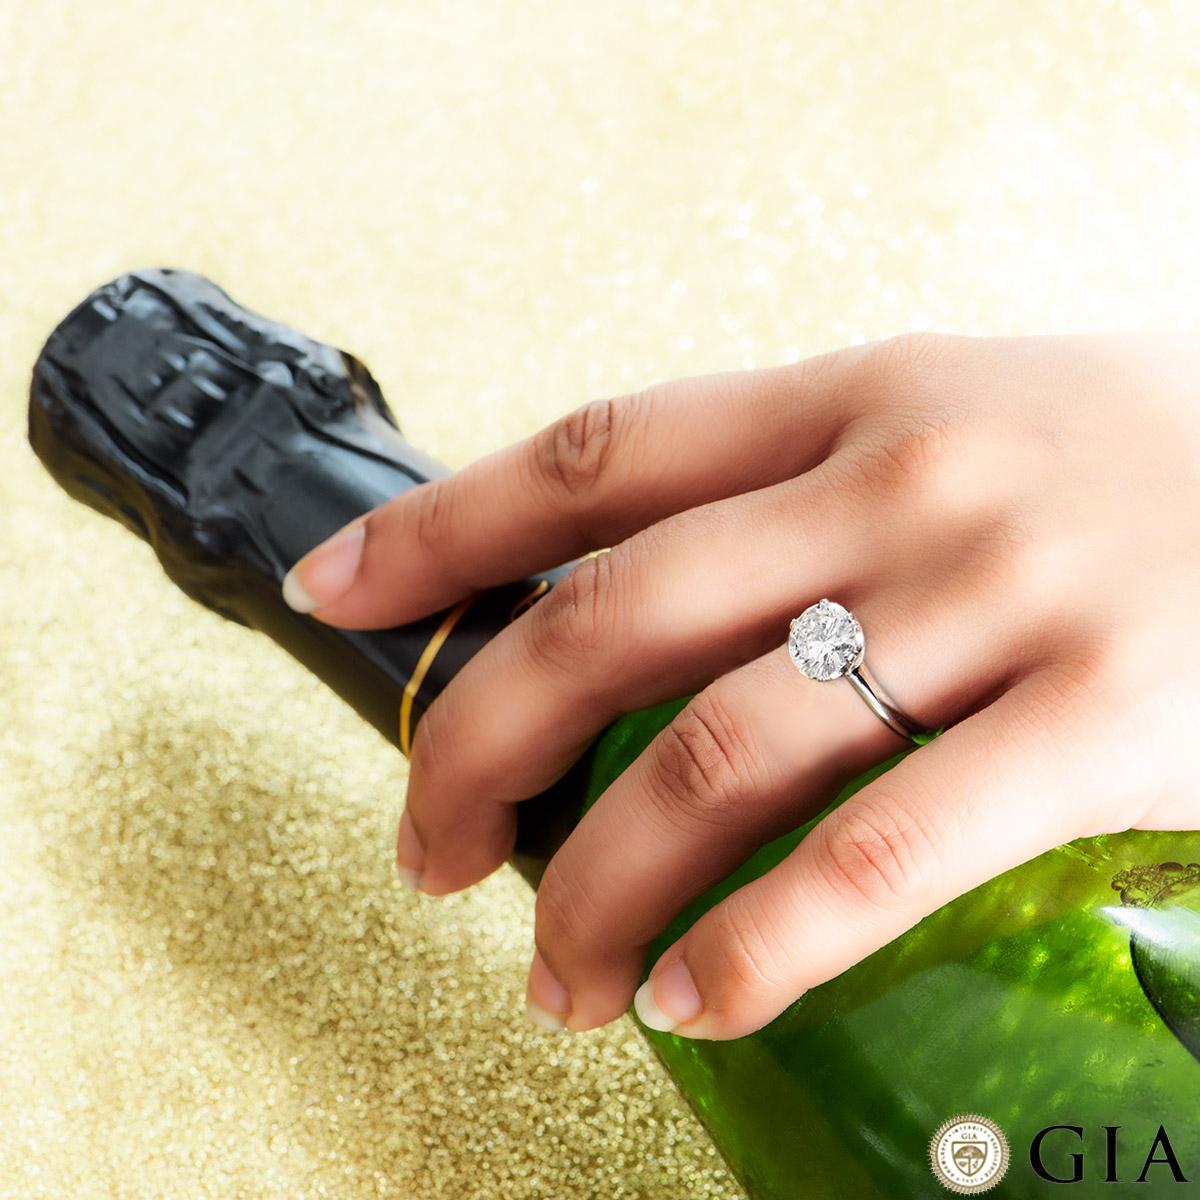 GIA Certed Platinum Round Brilliant Cut Diamond Ring 2.01ct G/SI2 For Sale 3